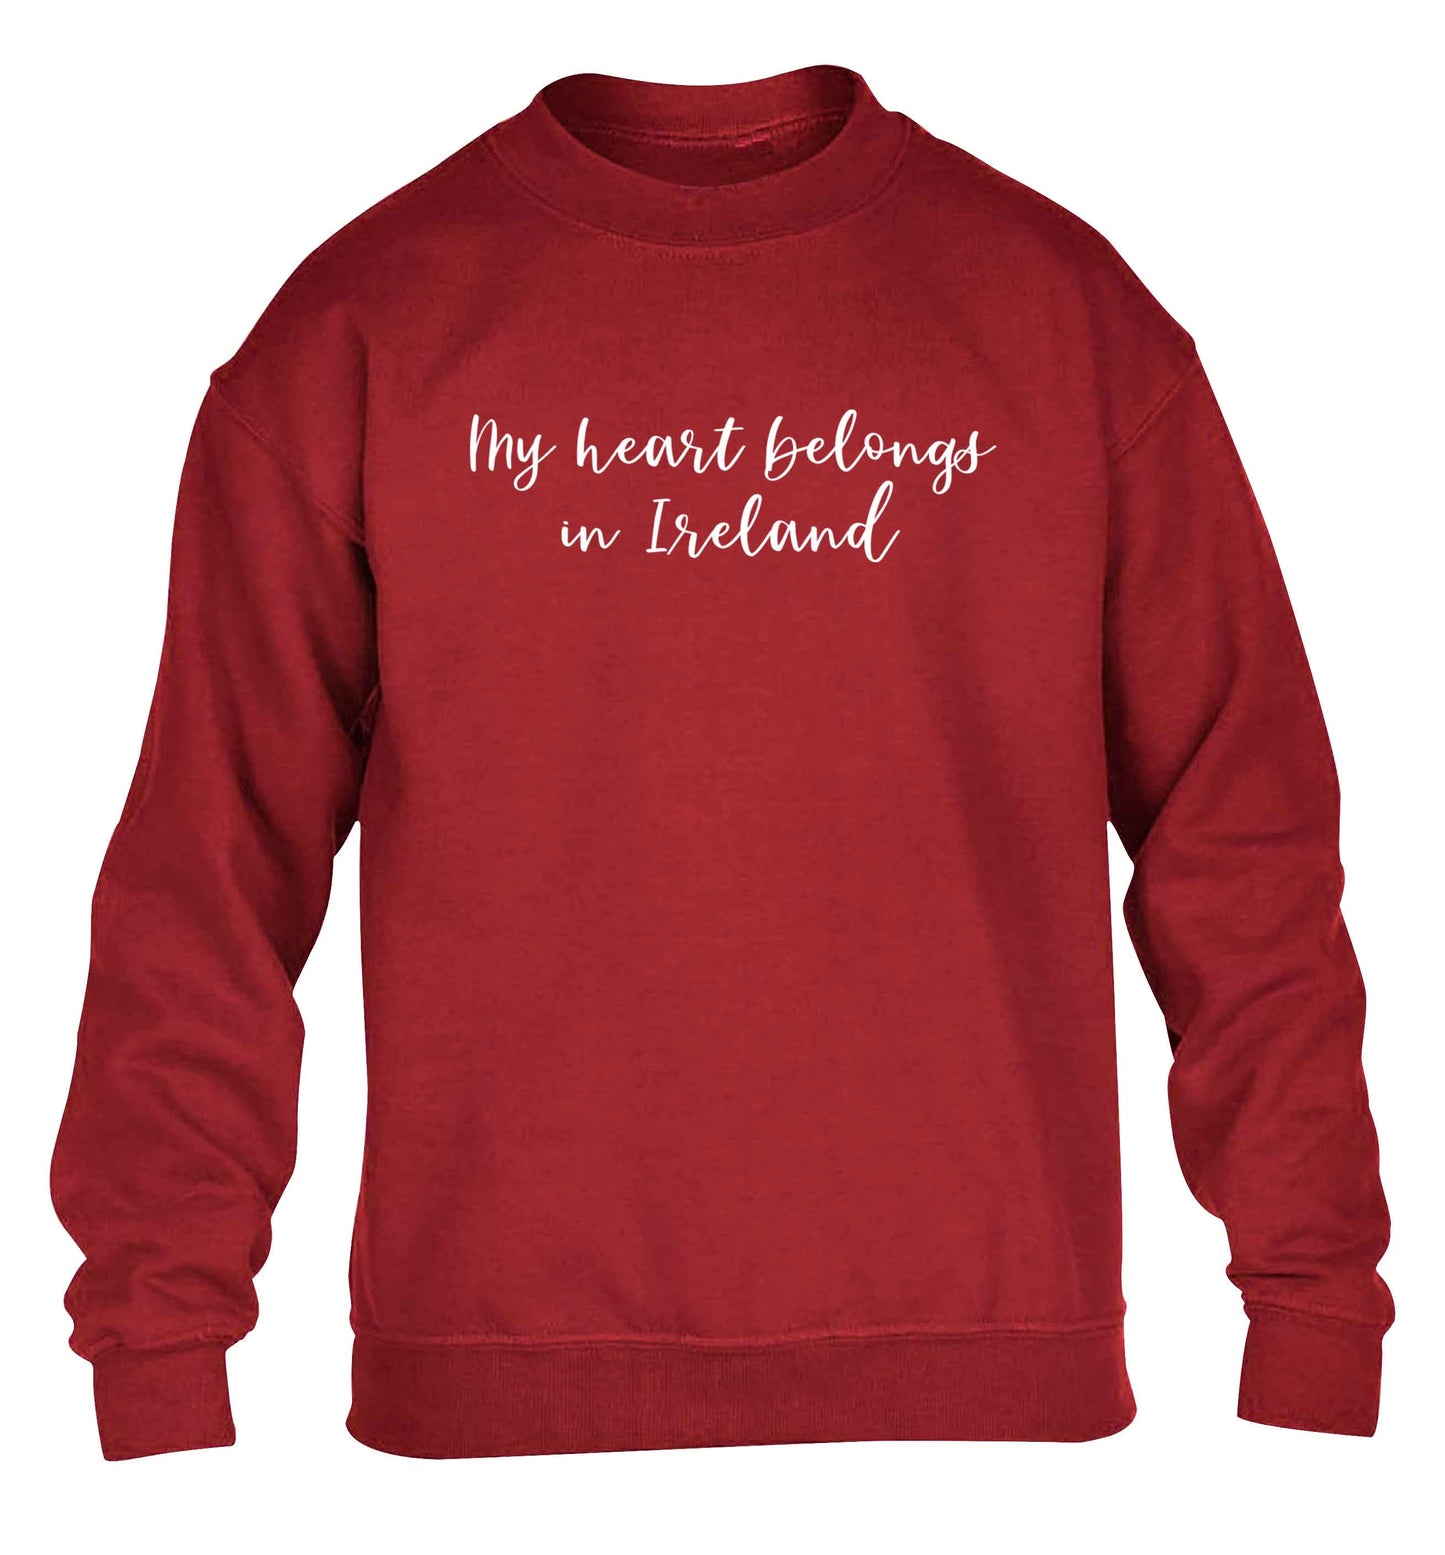 My heart belongs in Ireland children's grey sweater 12-13 Years